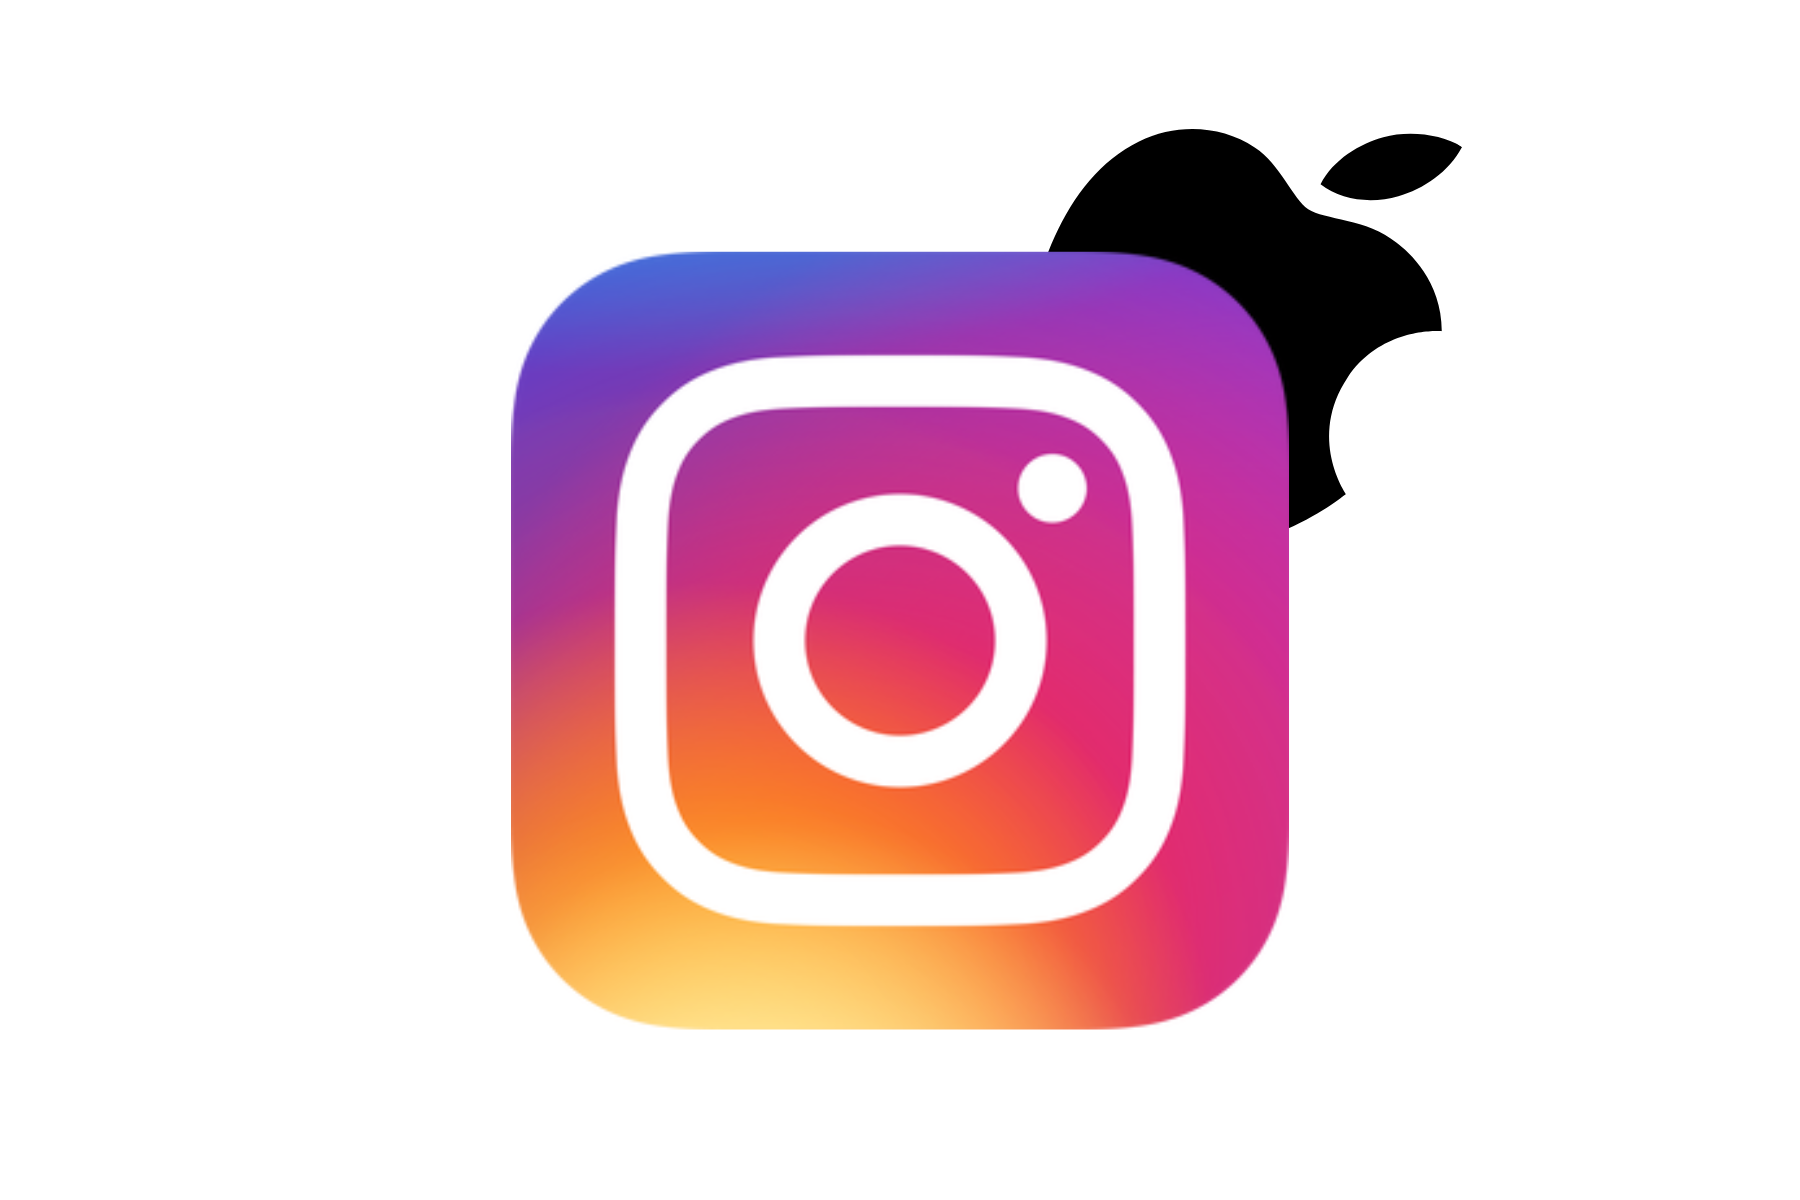 Instagram logo with iPhone logo